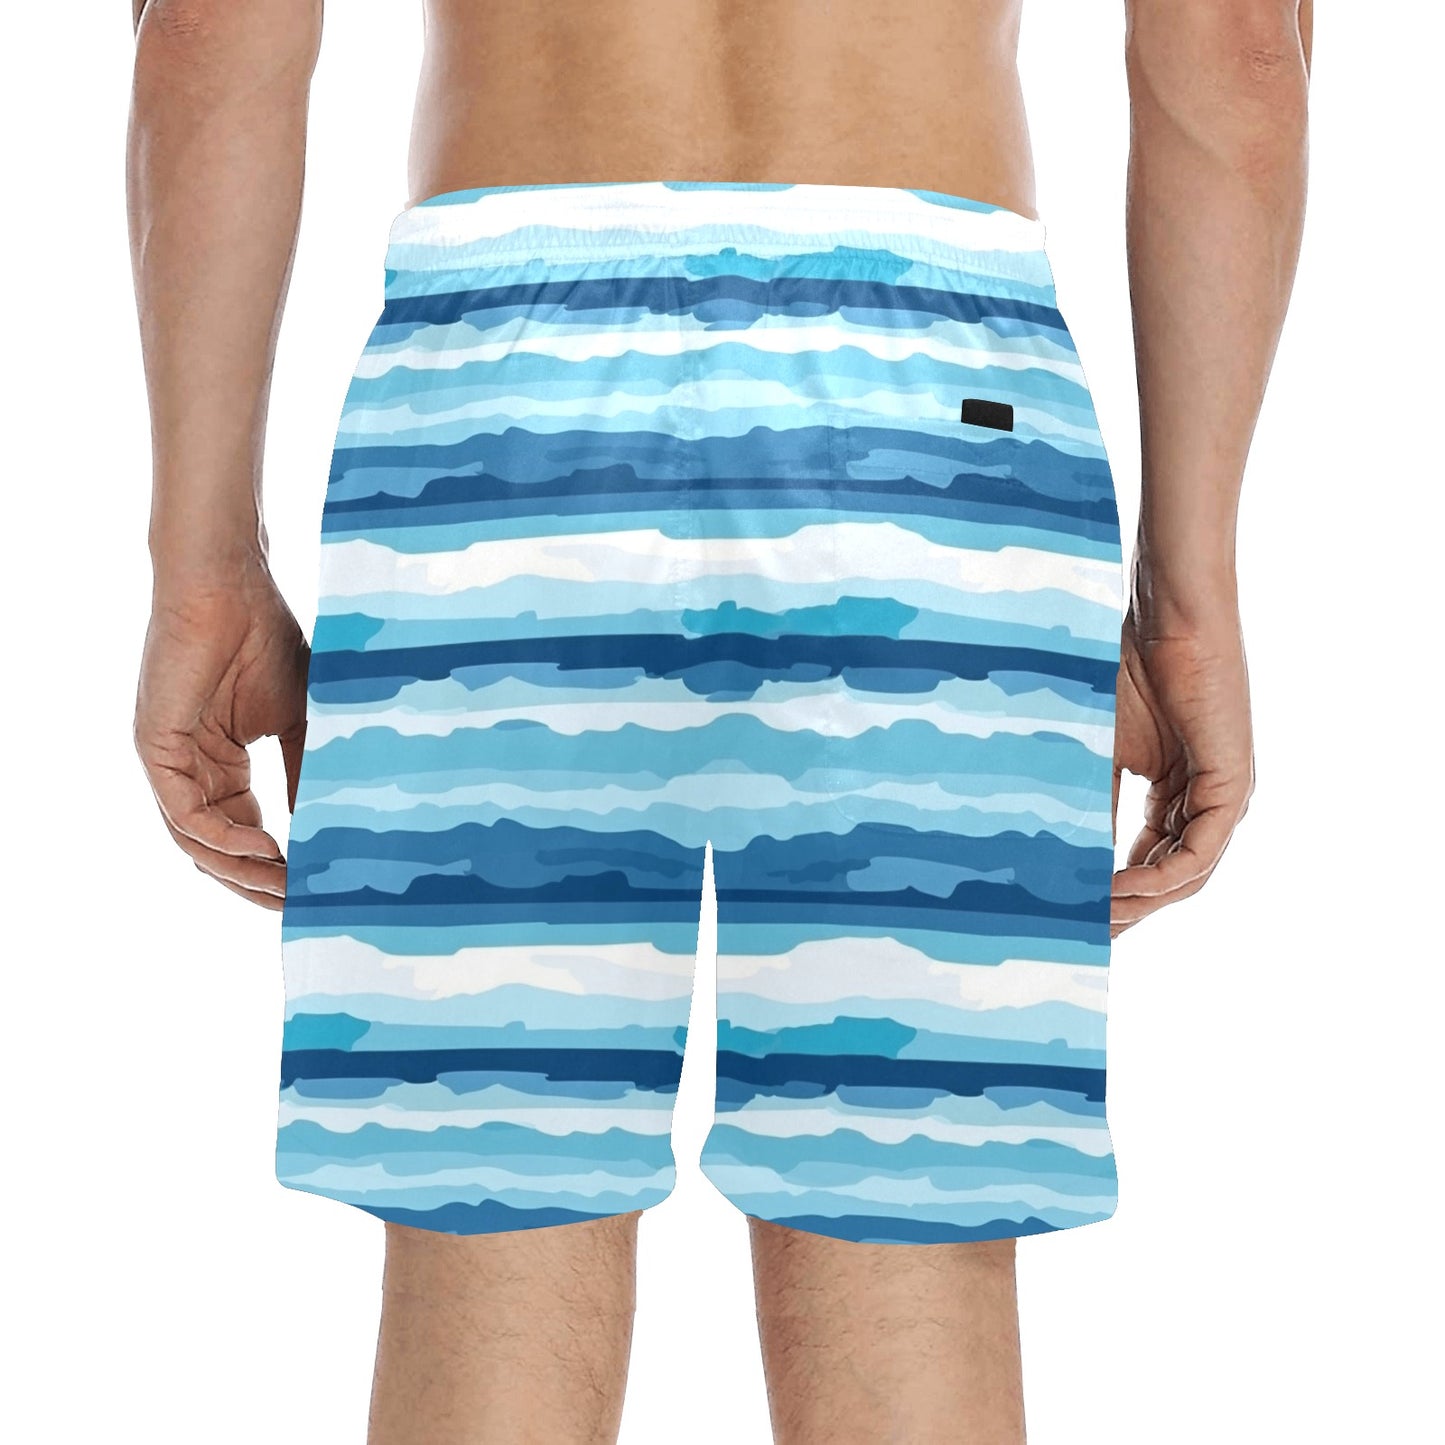 Striped Men Swim Trunks, Ocean Blue Mid Length Shorts Beach Pockets Mesh Lining Drawstring Boys Casual Bathing Suit Plus Size Swimwear